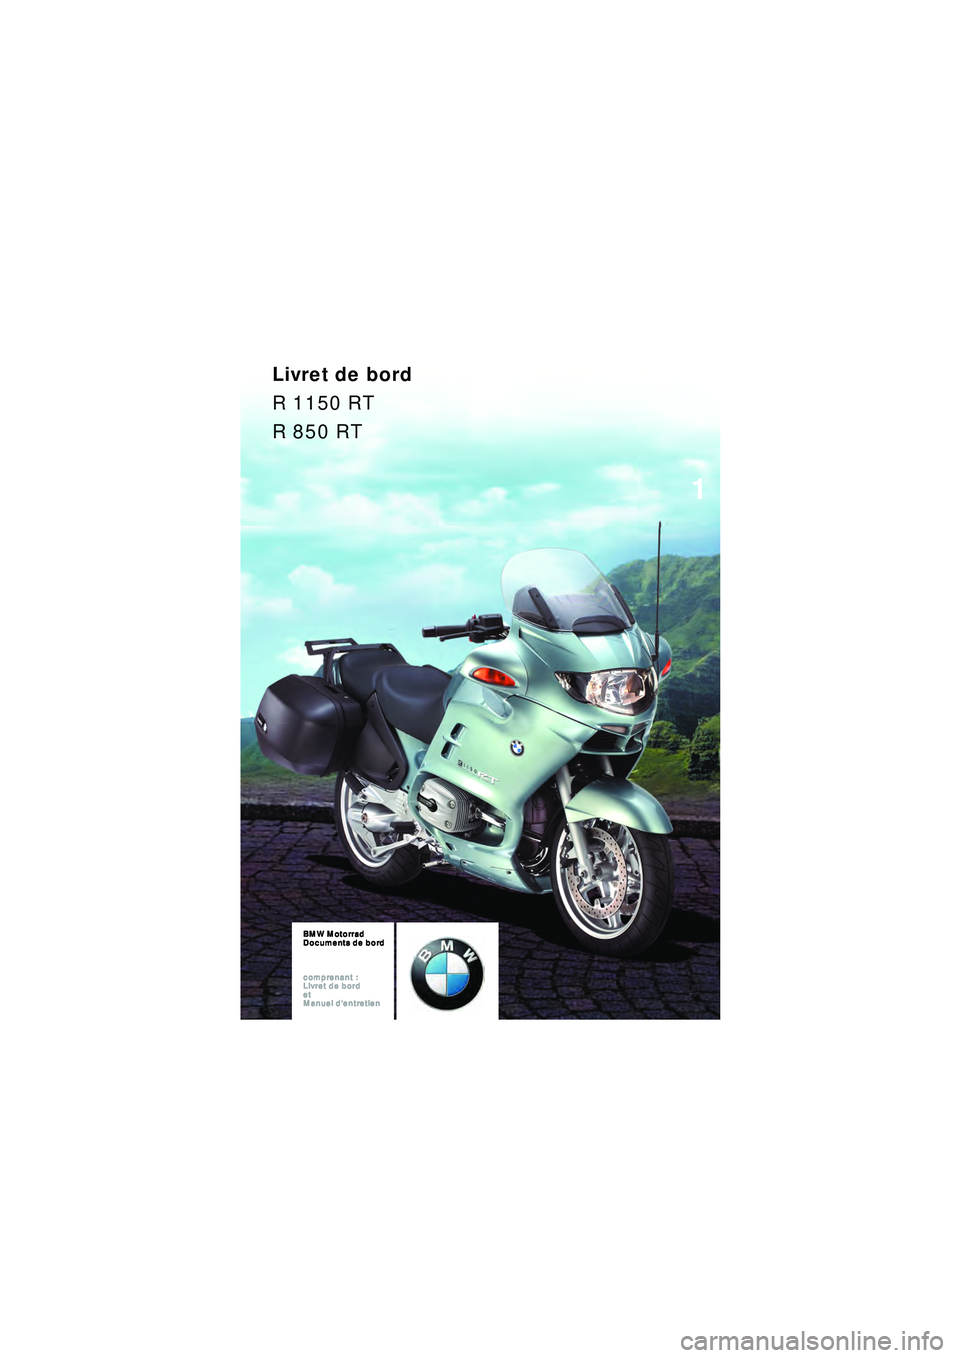 BMW MOTORRAD R 1150 RT 2002  Livret de bord (in French) 1
BMW Motorrad
Documents de bord
comprenant :  
Livret de bord  
et  
Manuel dentretien BMW Motorrad
Documents de bord
comprenant :  
Livret de bord  
et  
Manuel dentretien BMW Motorrad
Documents d